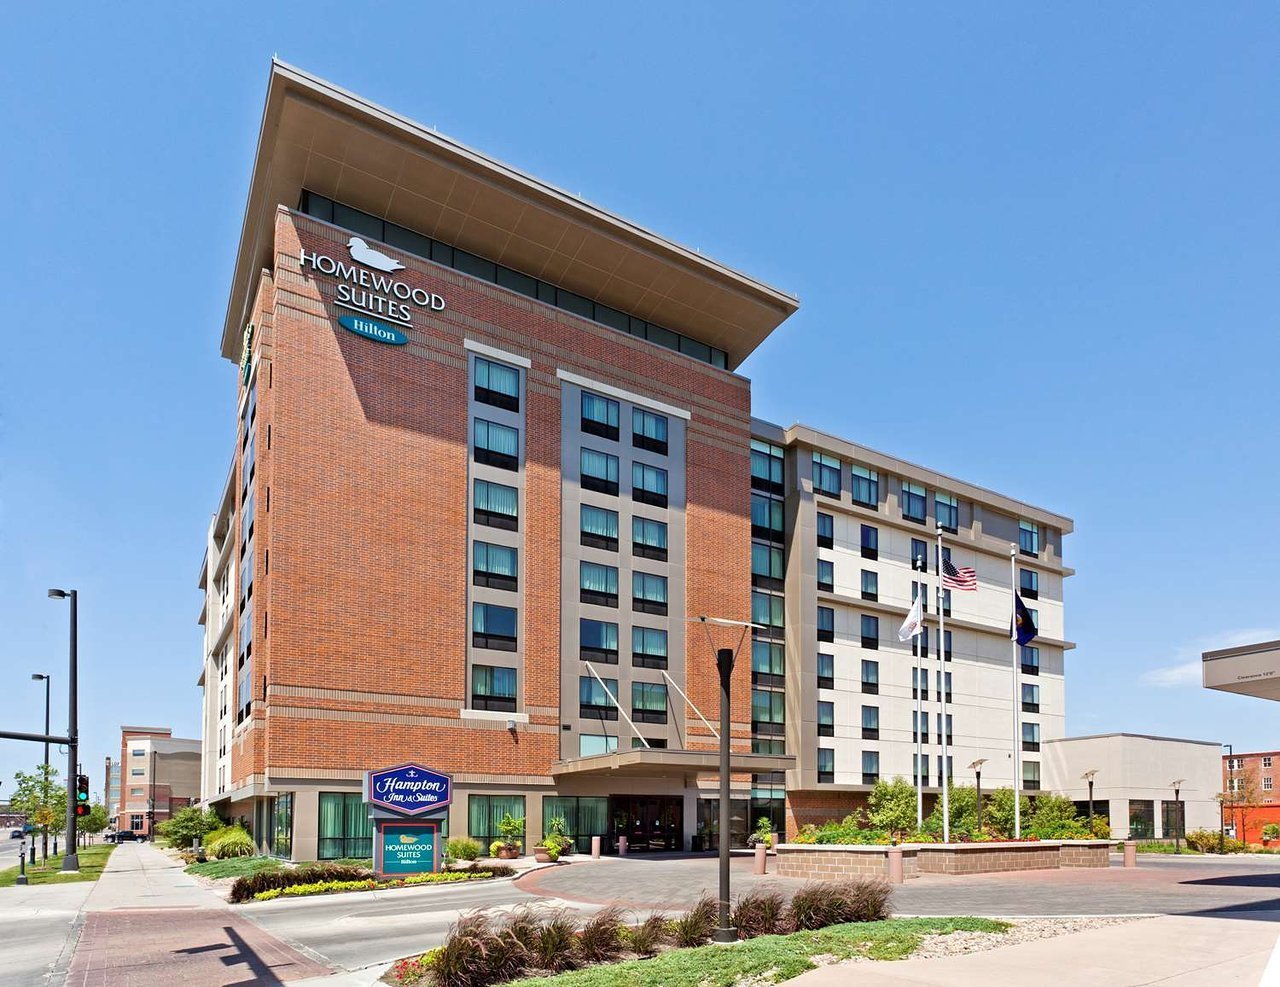 Photo of Homewood Suites by Hilton Omaha Downtown, Omaha, NE